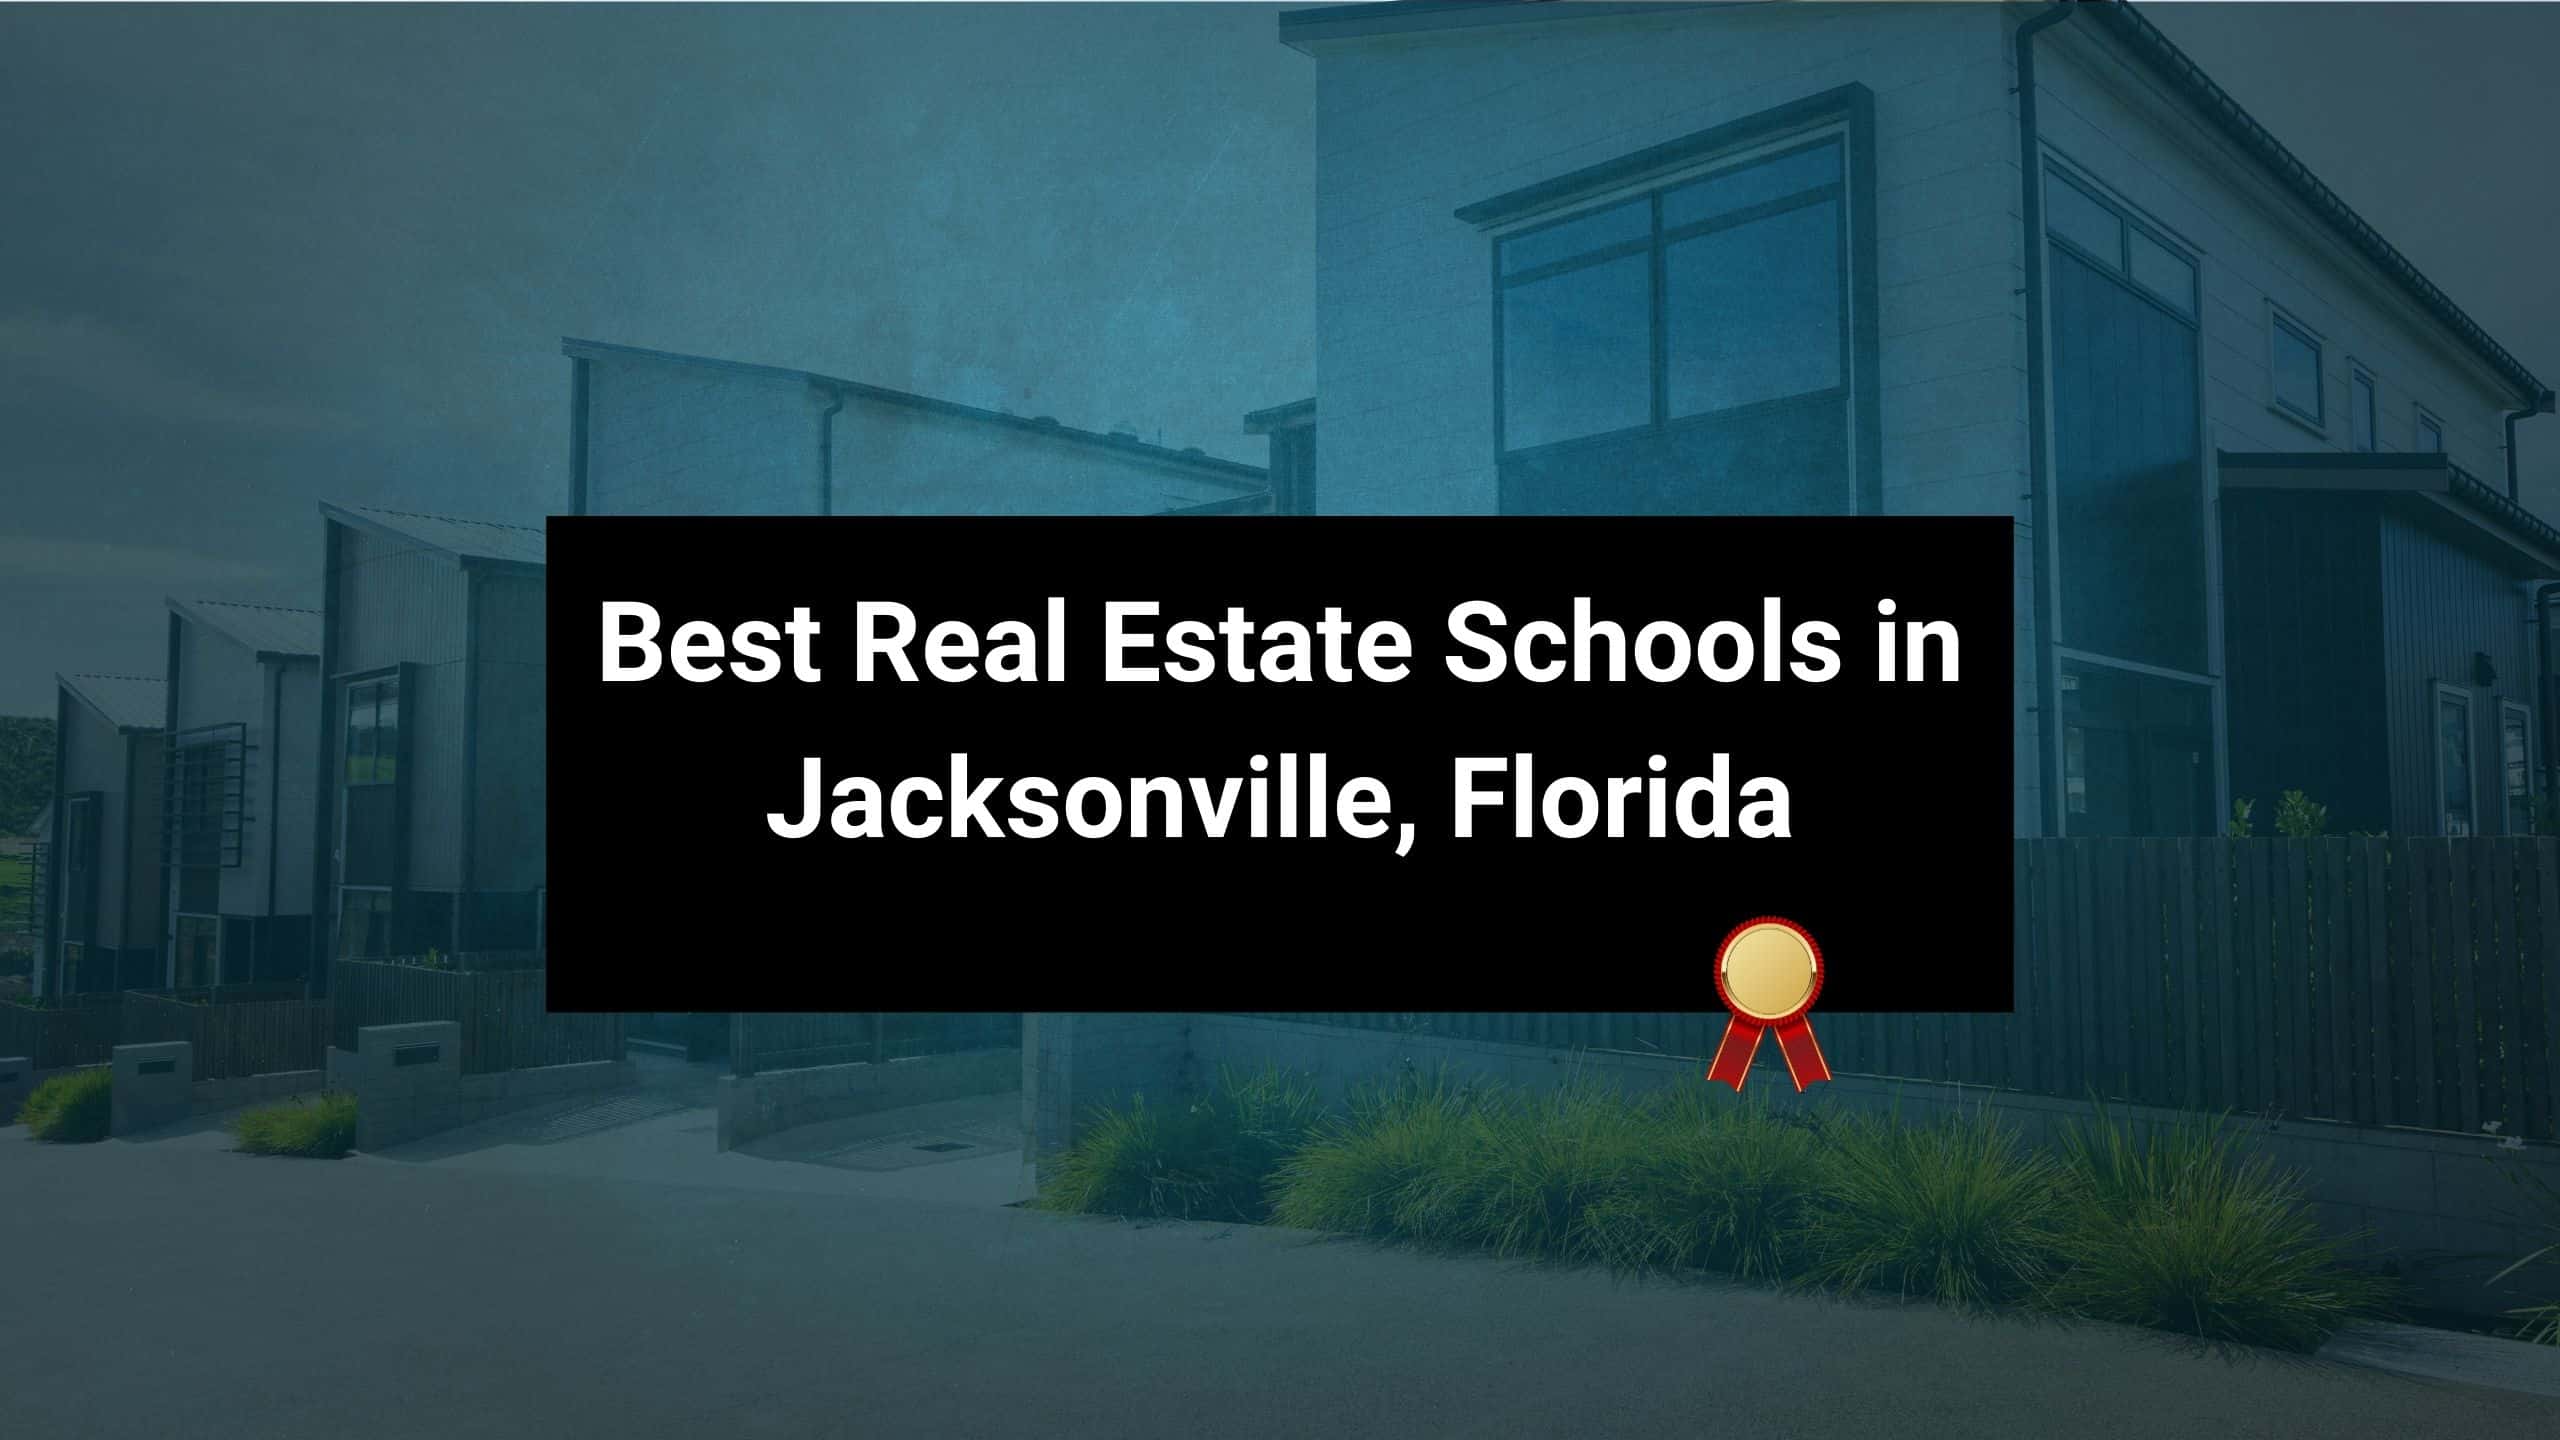 Jacksonville Florida Image